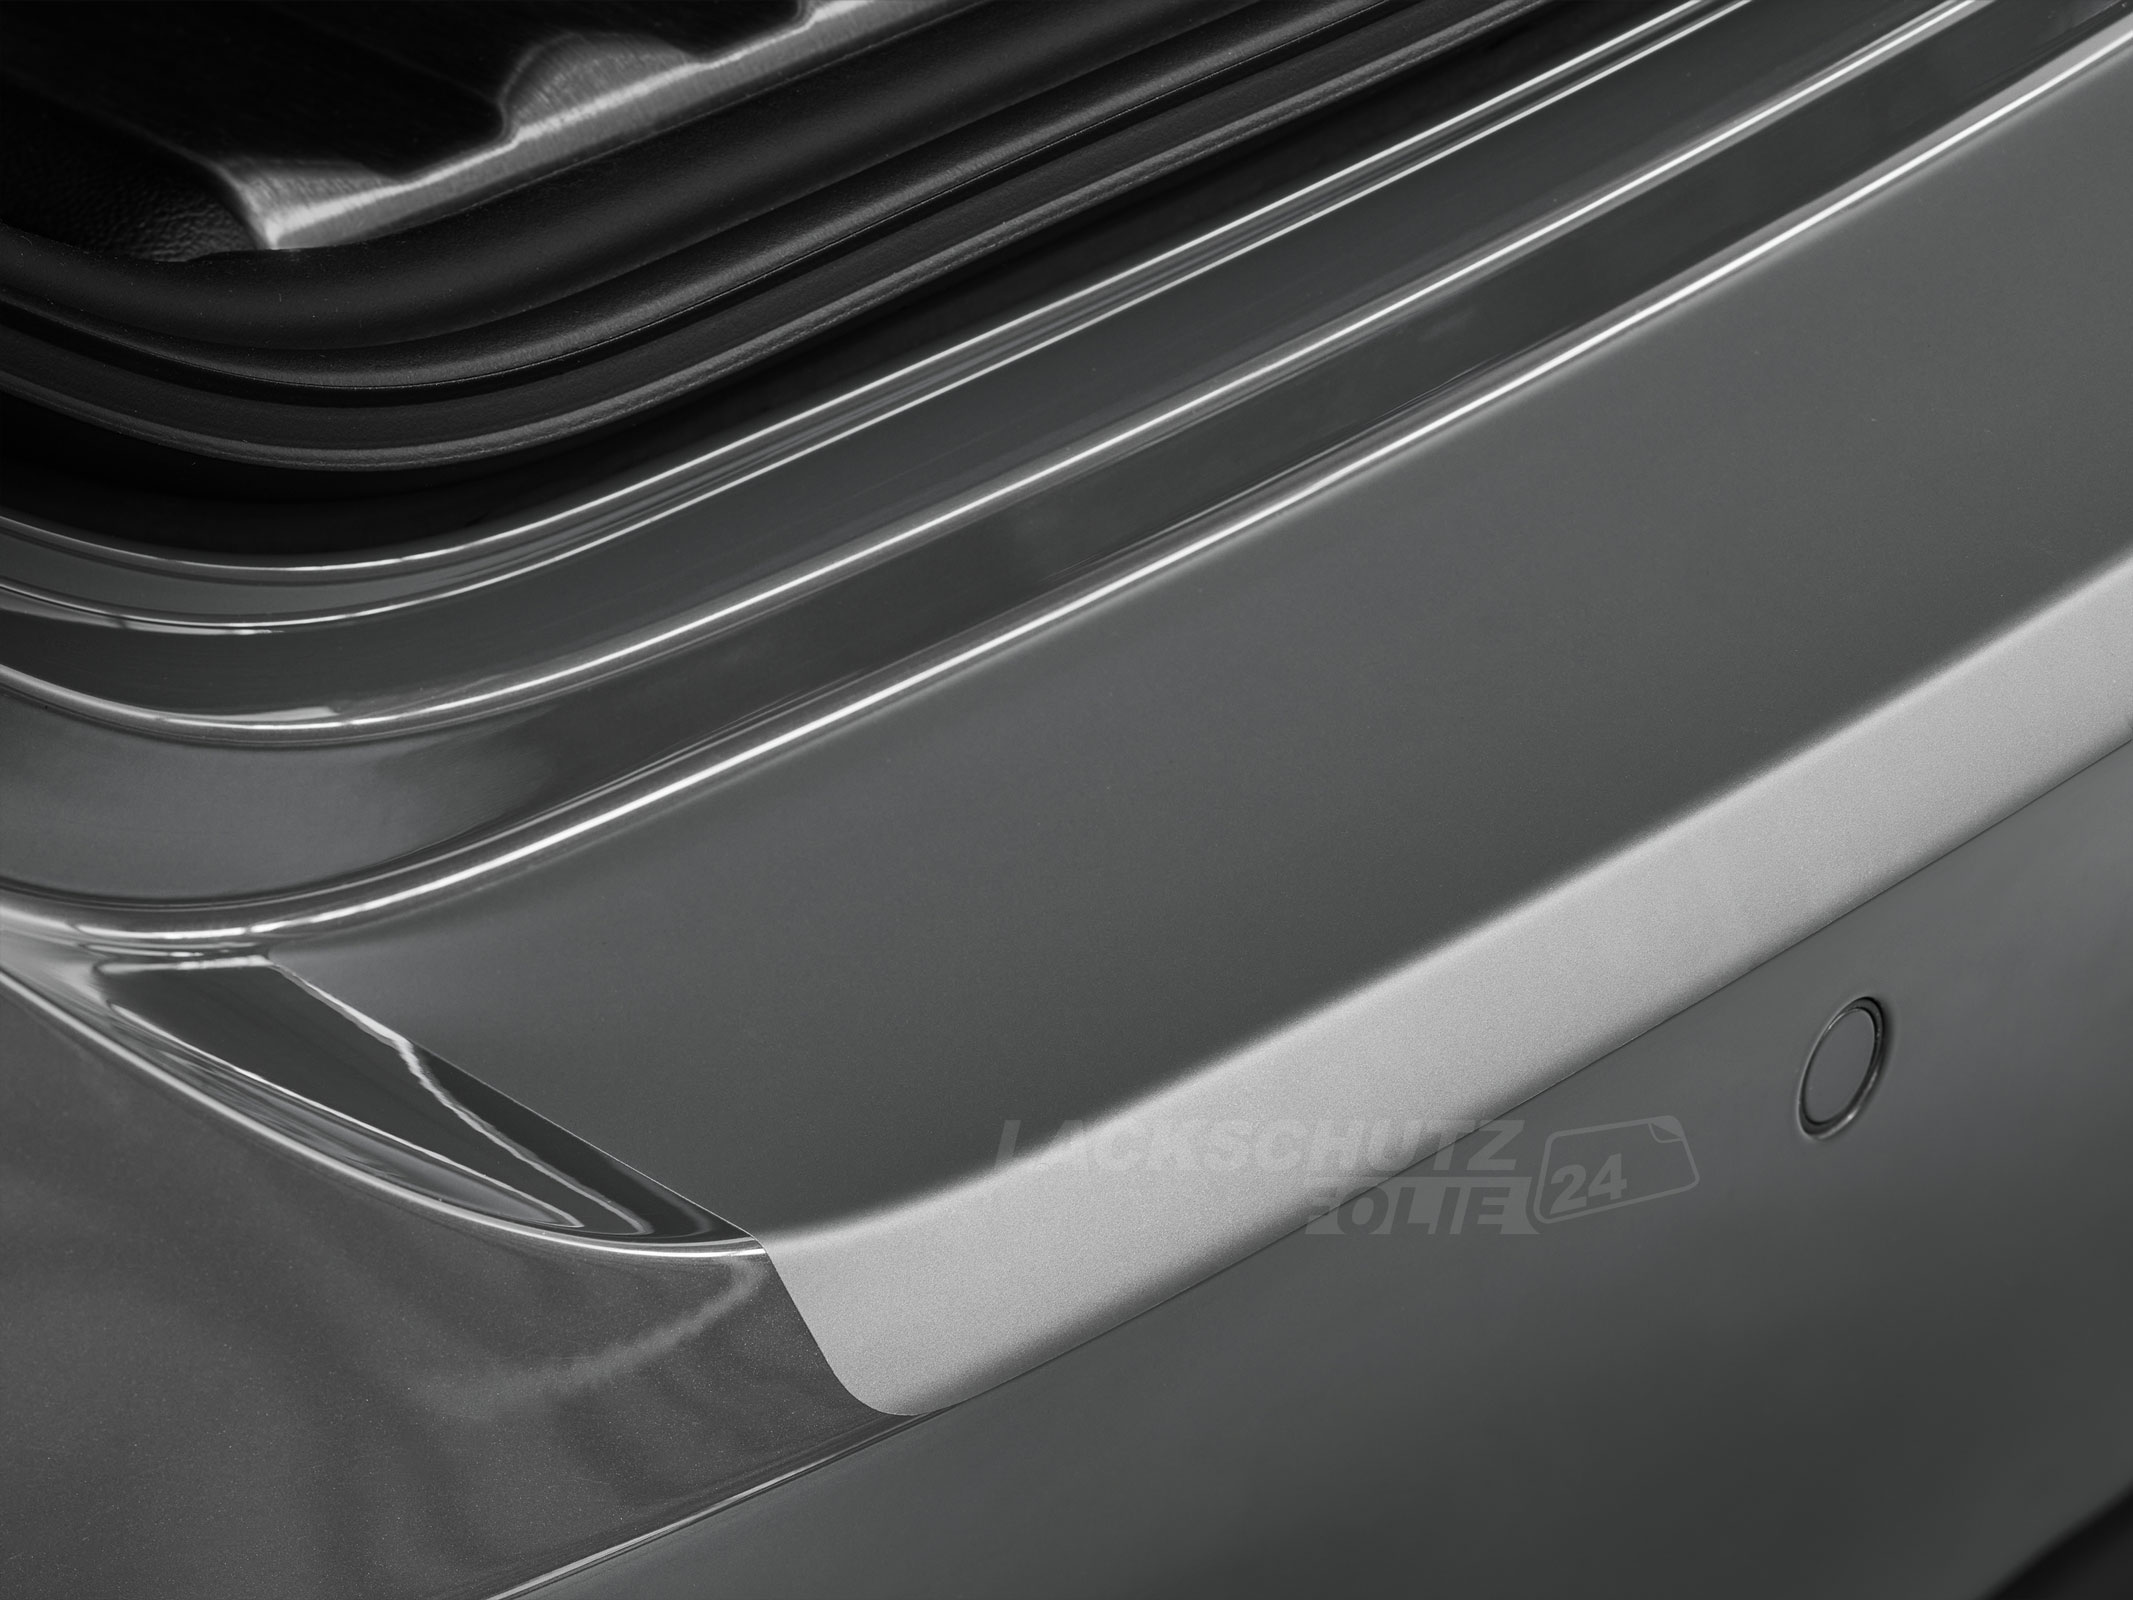 Ladekantenschutzfolie - Transparent Glatt MATT 110 µm stark  für Mercedes-Benz A-Klasse Typ W176, BJ 10/2012-05/2018